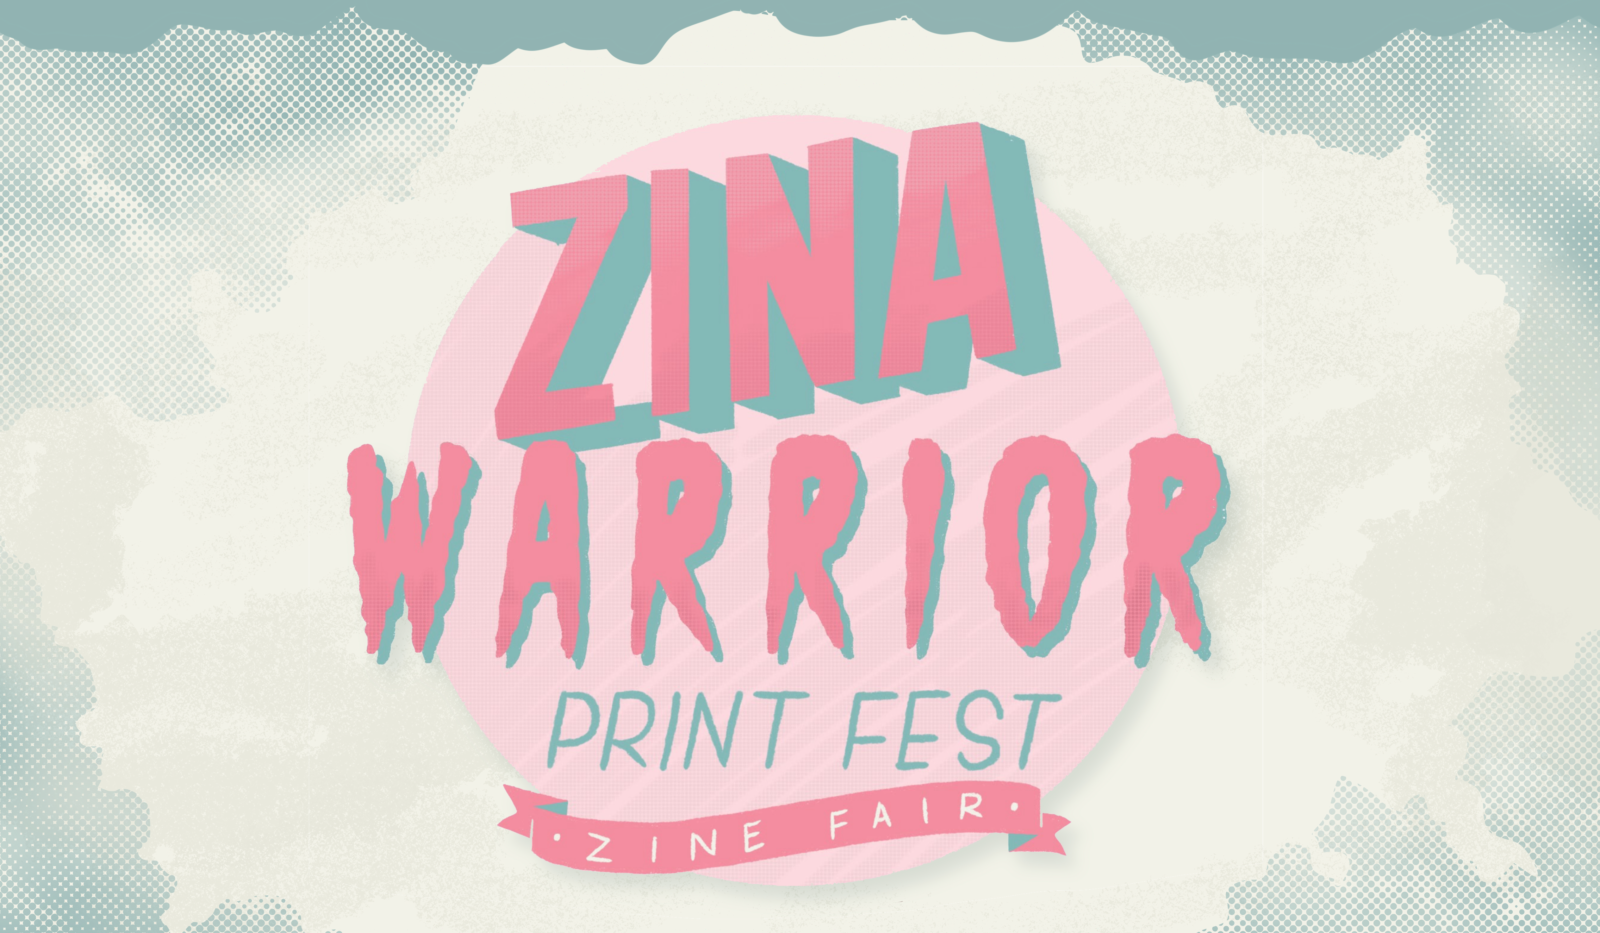 Zine Fair Warrior Print Fest